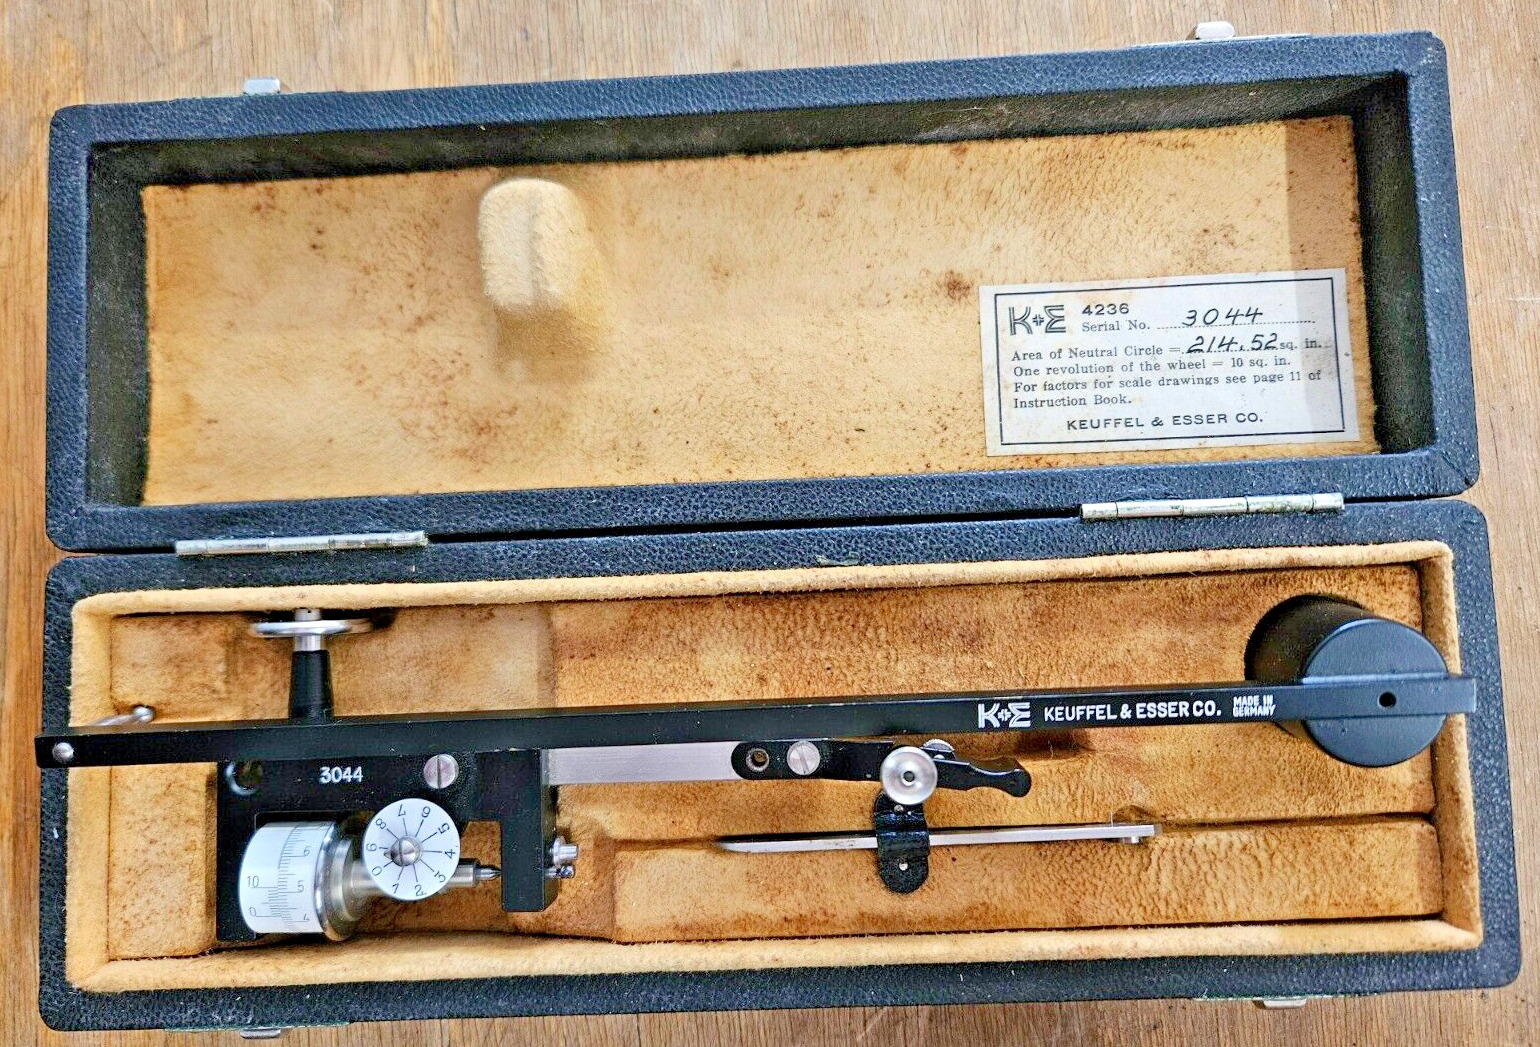 K & E  / Keuffel & Esser  No. 4236 Polar Planimeter Antique Surveying / Drafting